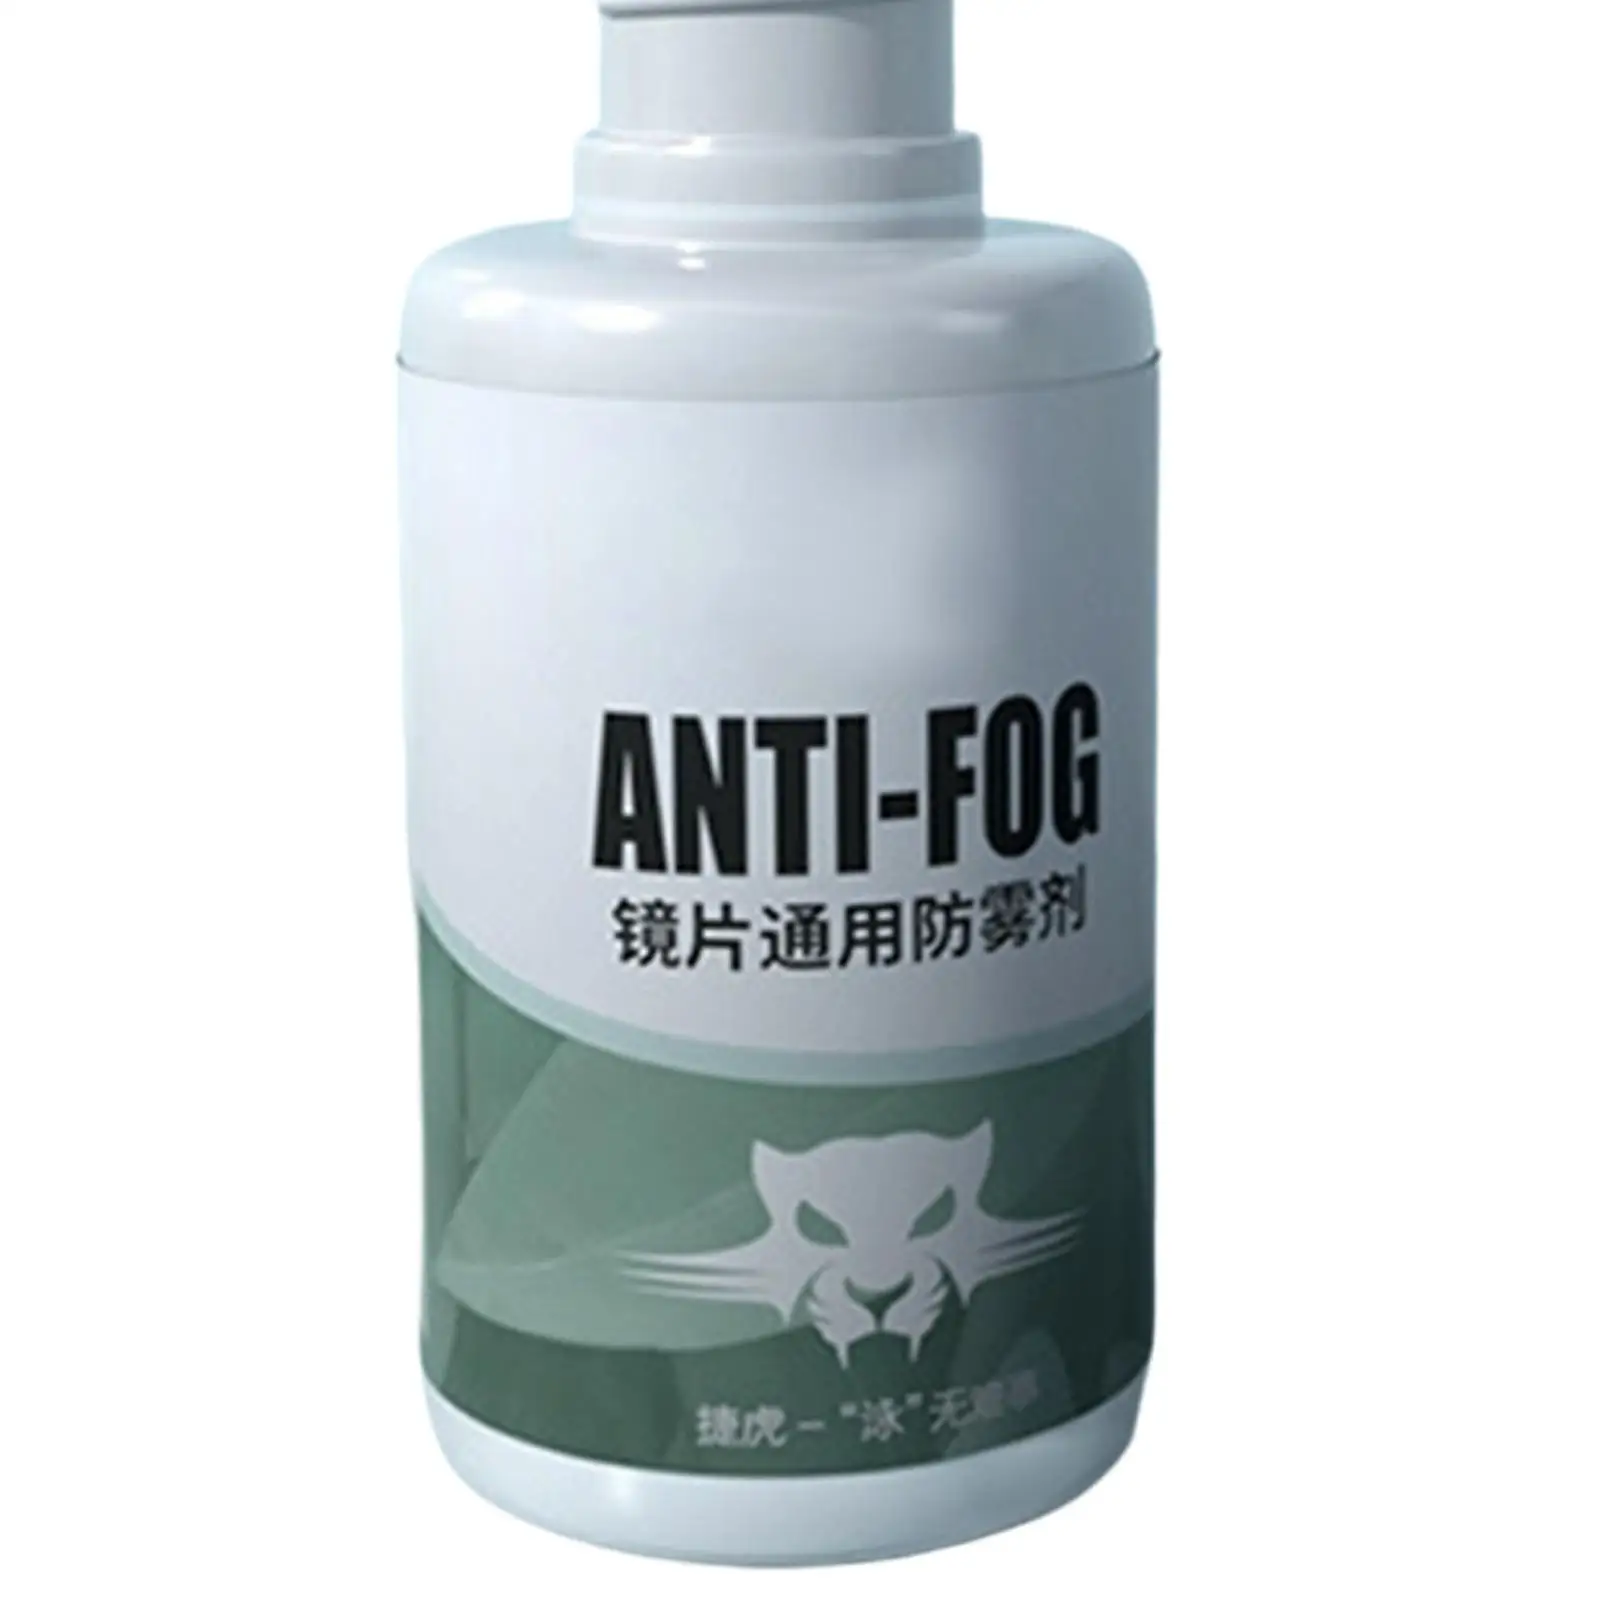 Anti Fog Spray Antifogging Liquid Snorkel Defogger for Eyeglass Mirror Bathroom Swim Accessories Windshield Diving Glasses